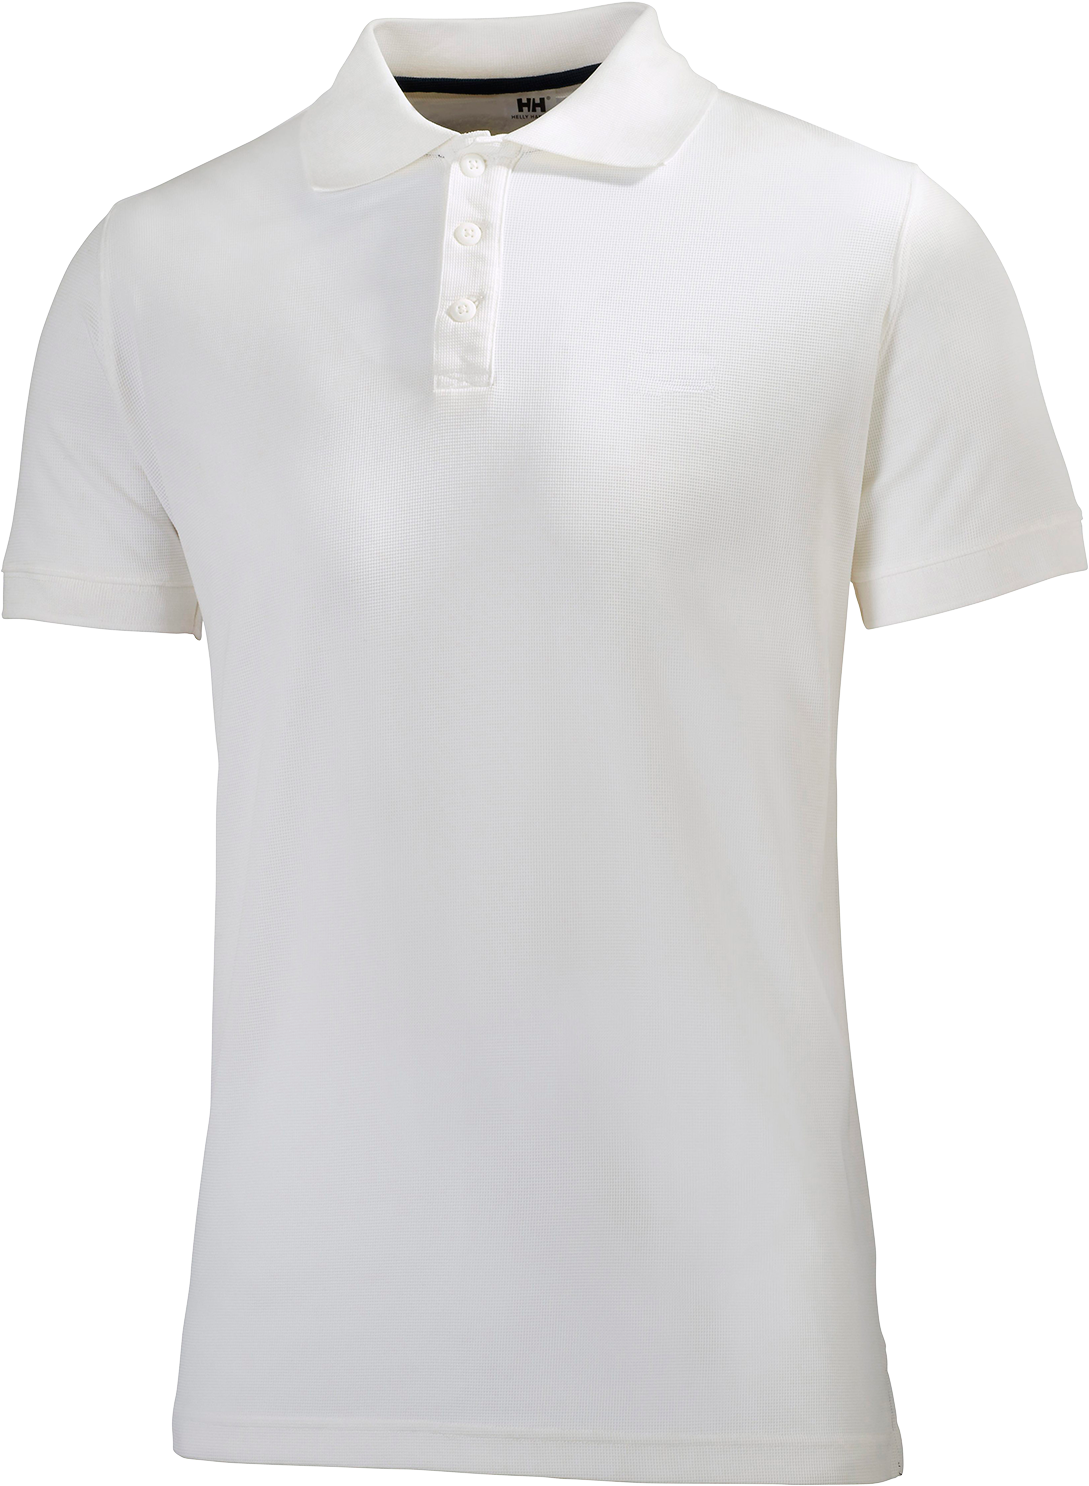 Polo Shirt Png 1089 X 1486